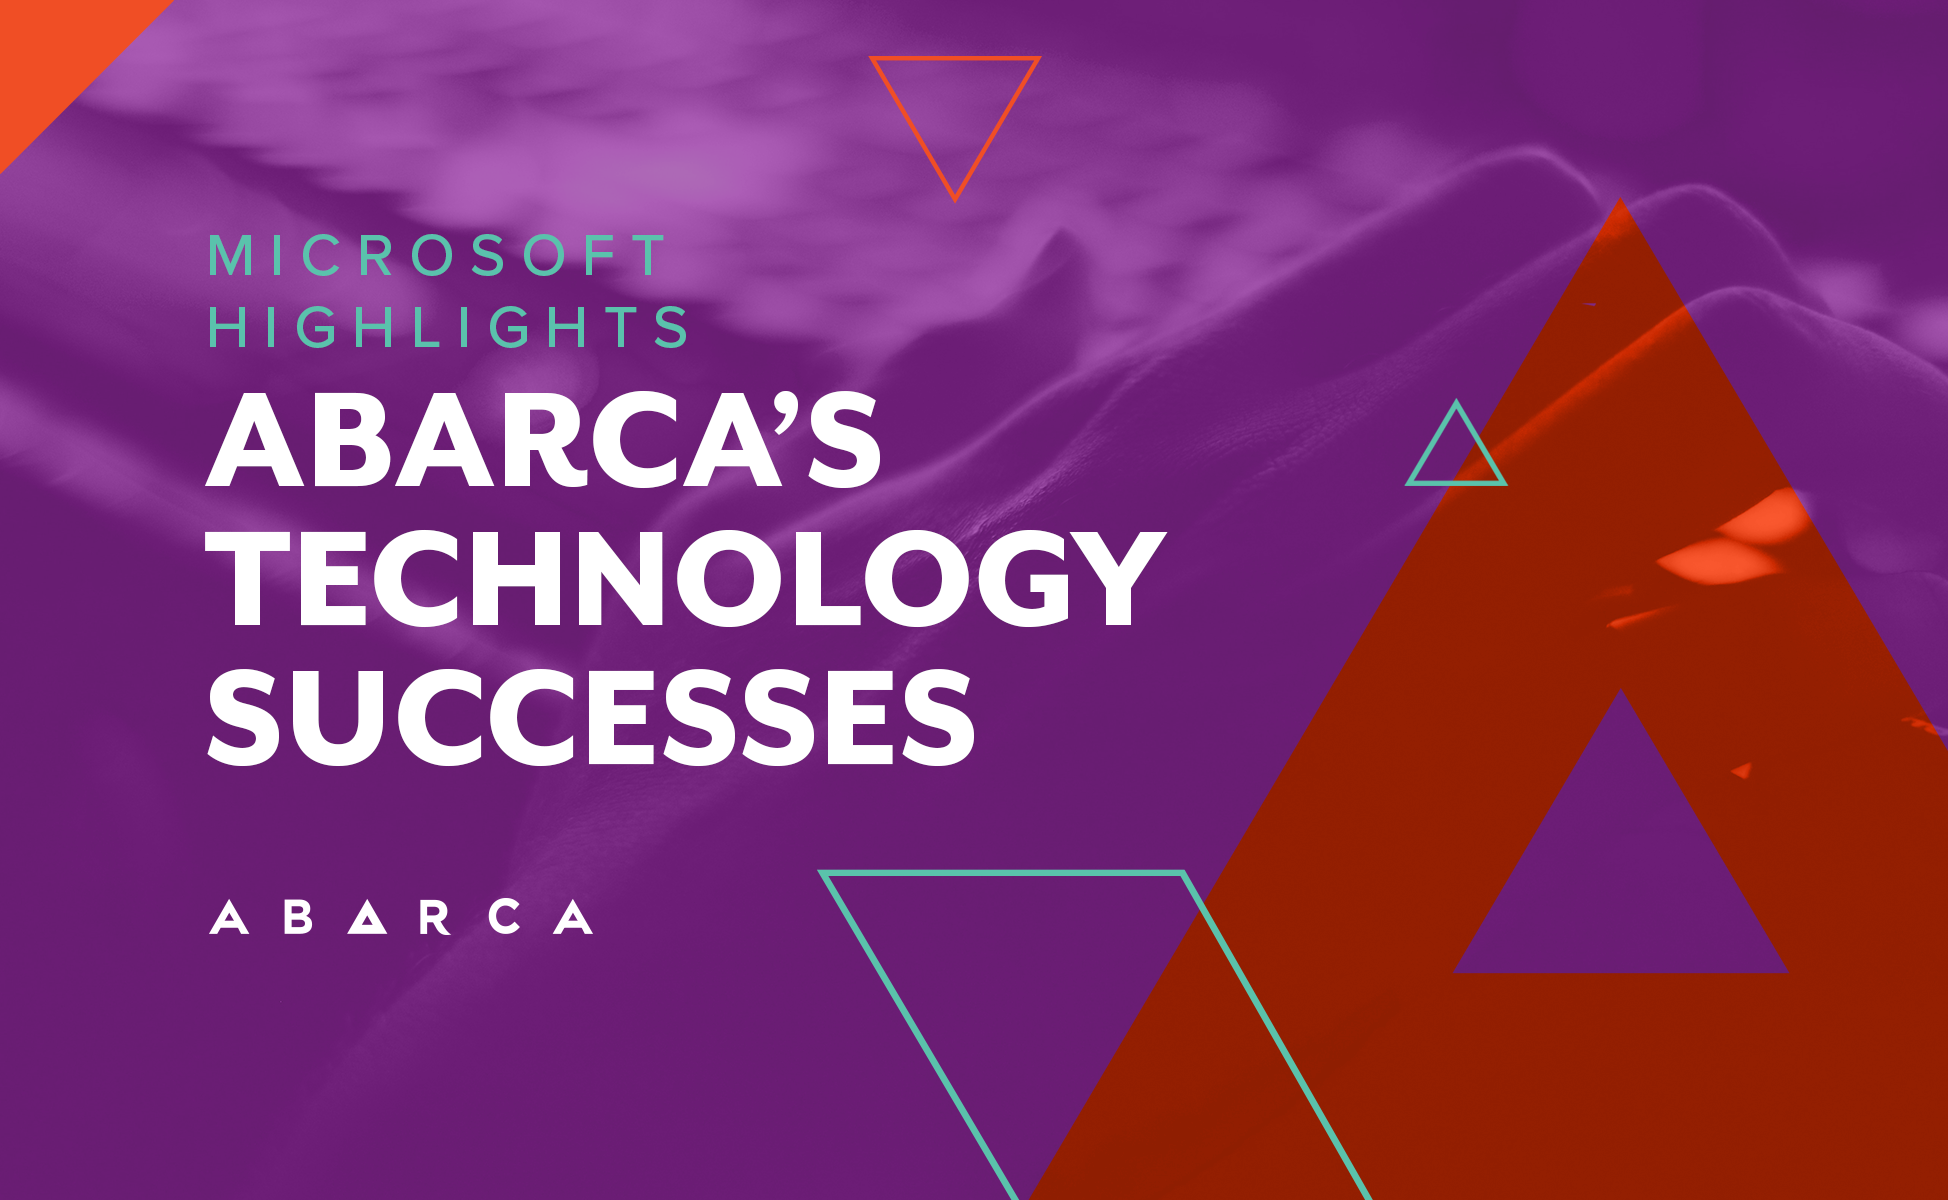 Microsoft highlights Abarca’s technology successes.